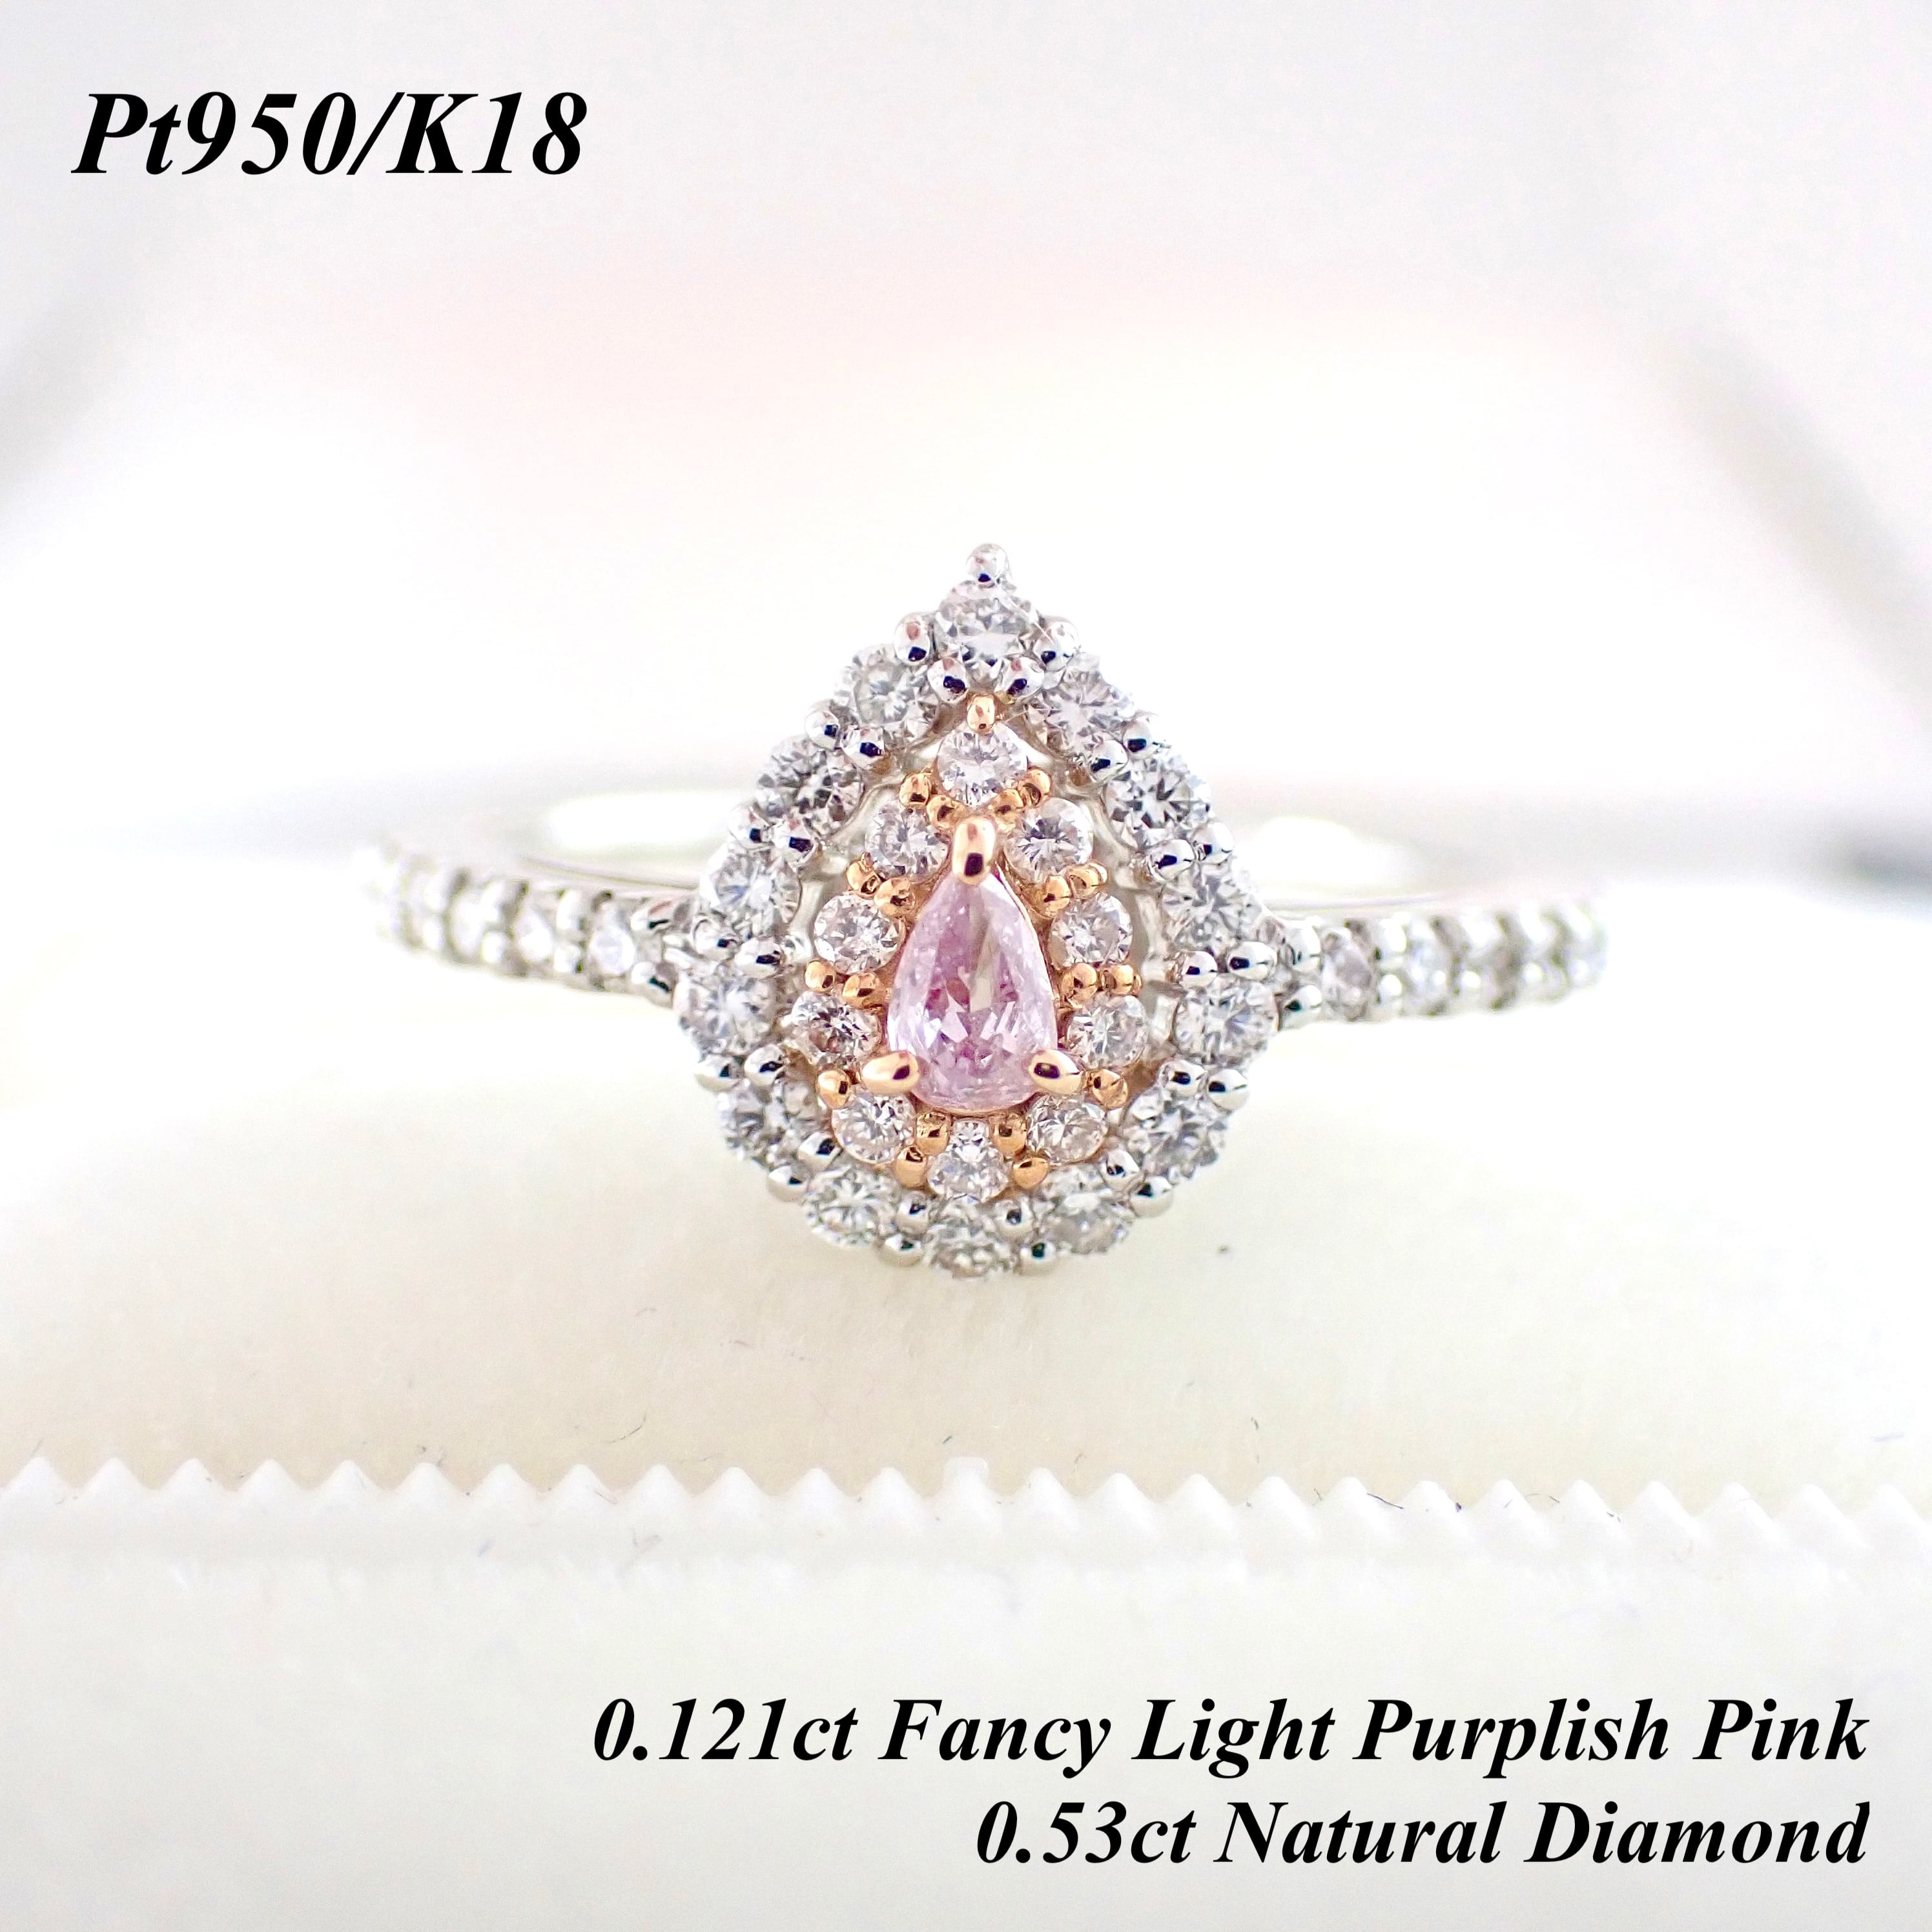 0.121ct Pear Shaped Fancy Light Purplish Pink Diamond Ring